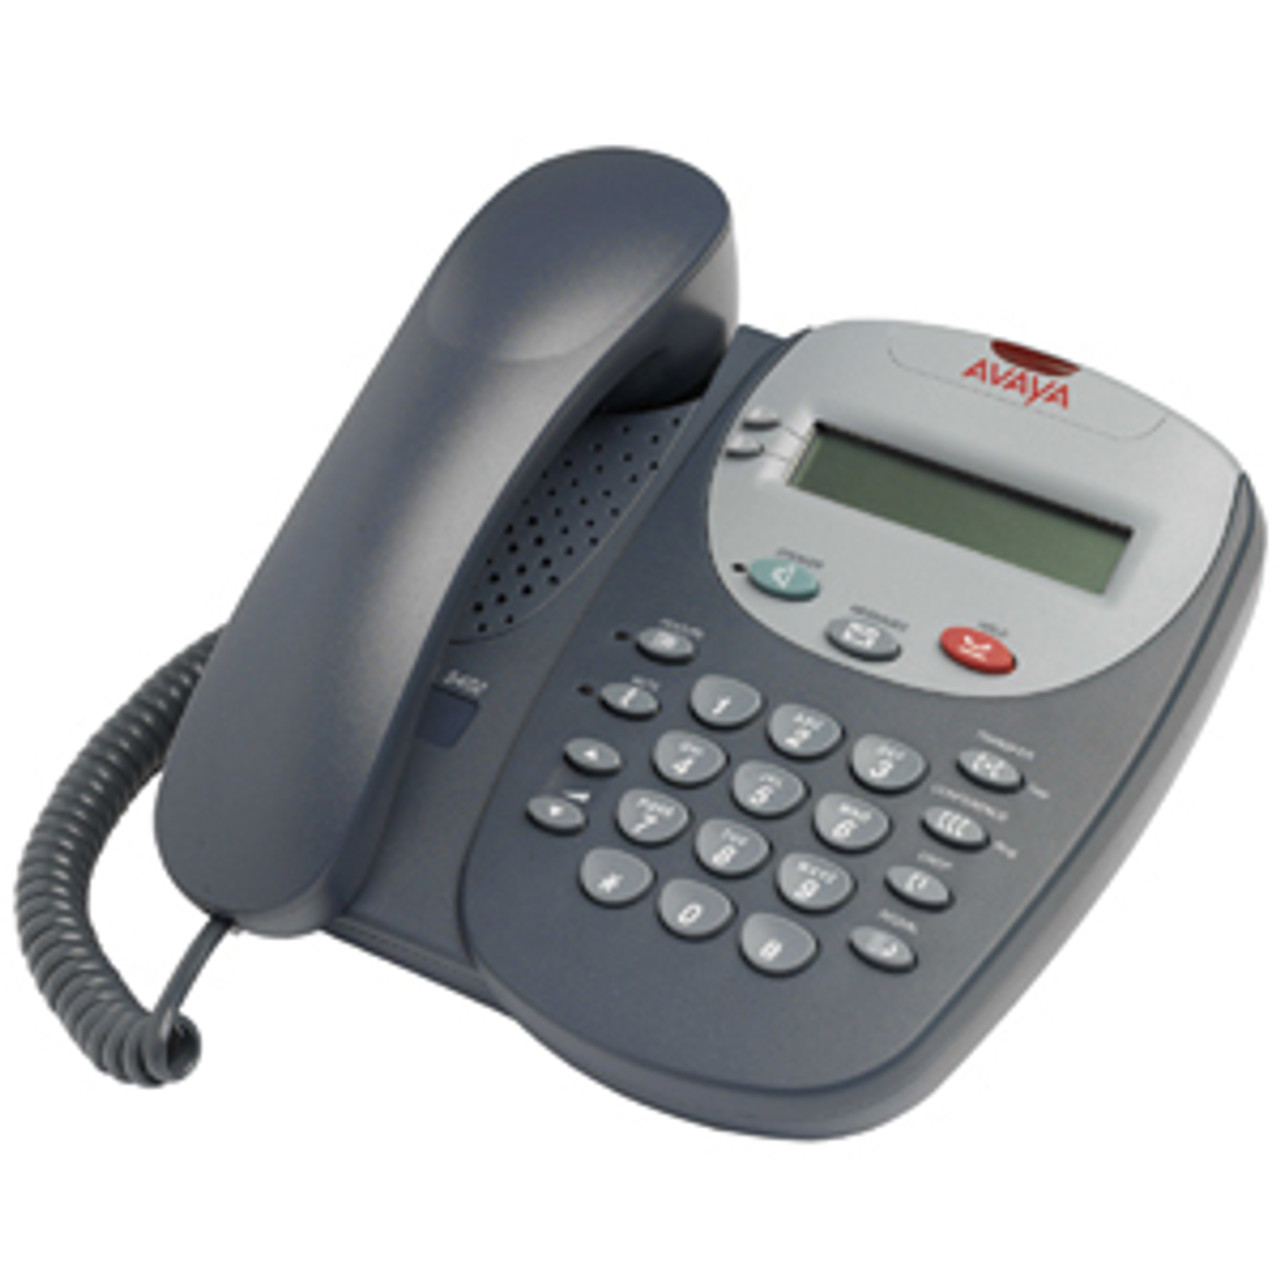 700381627 Avaya 5420 Digital Telephone 1 x Phone Line(s) 1 x Sub-mini phone Headset Dark Gray (Refurbished)